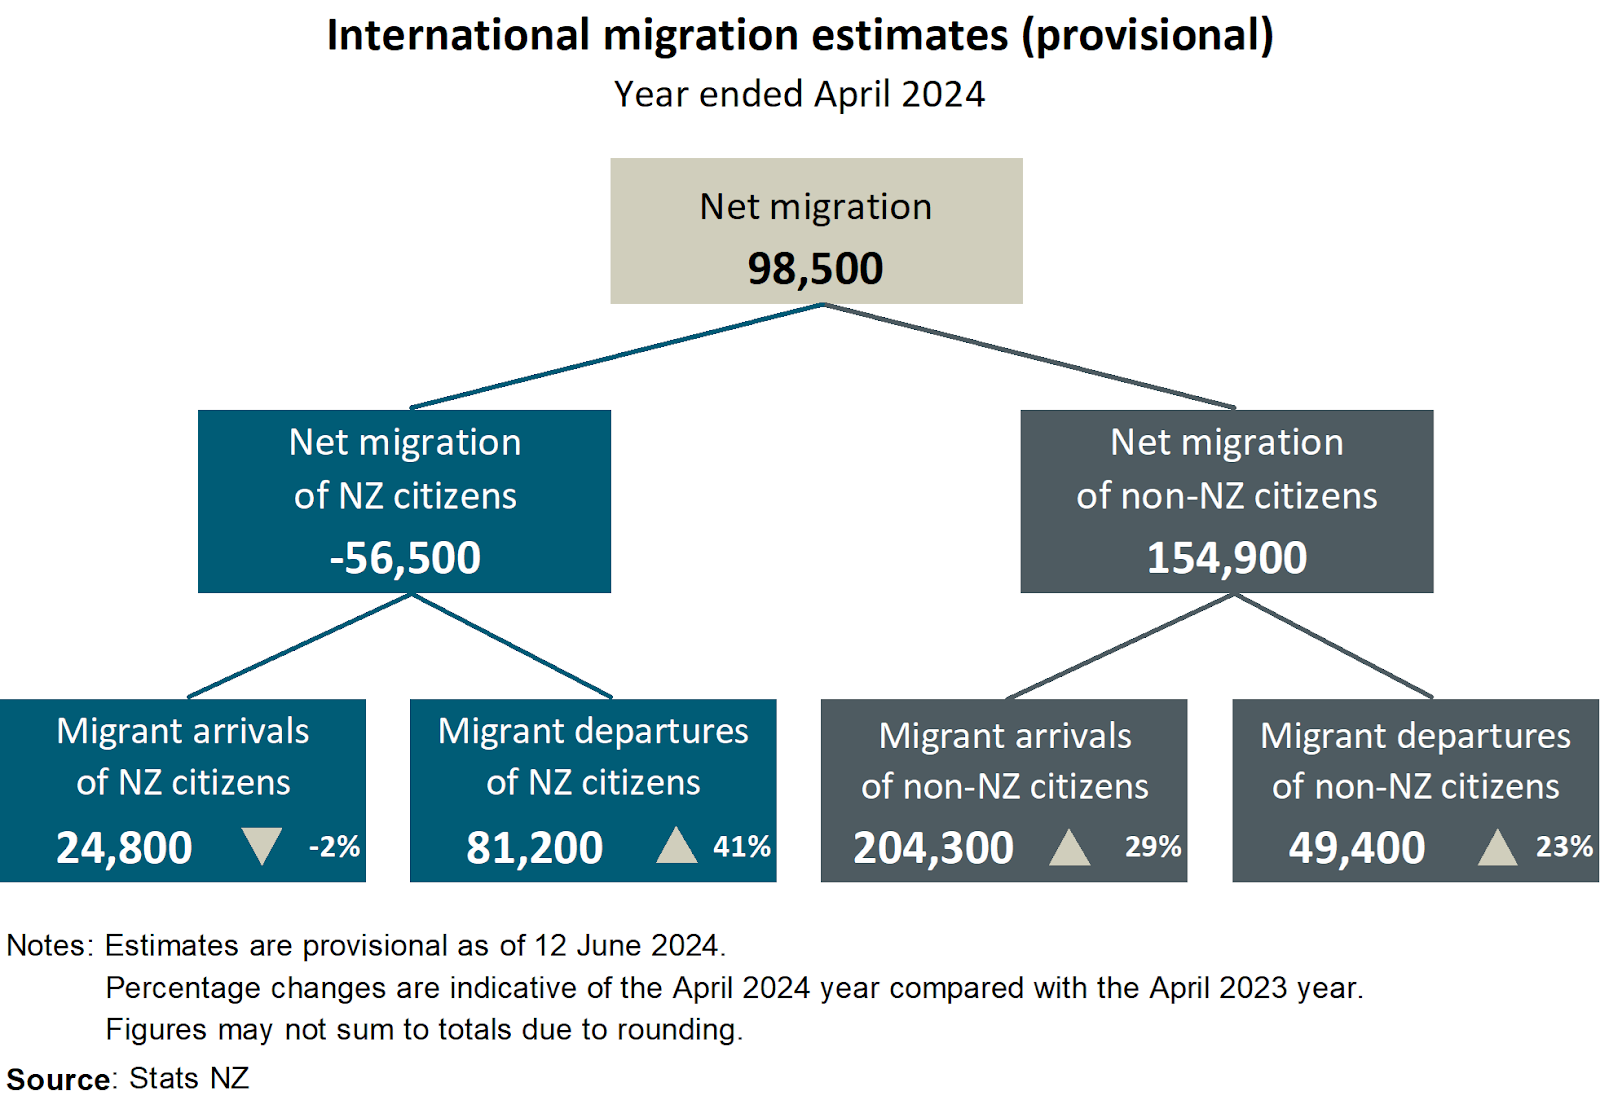 Diagram showing international migration estimates